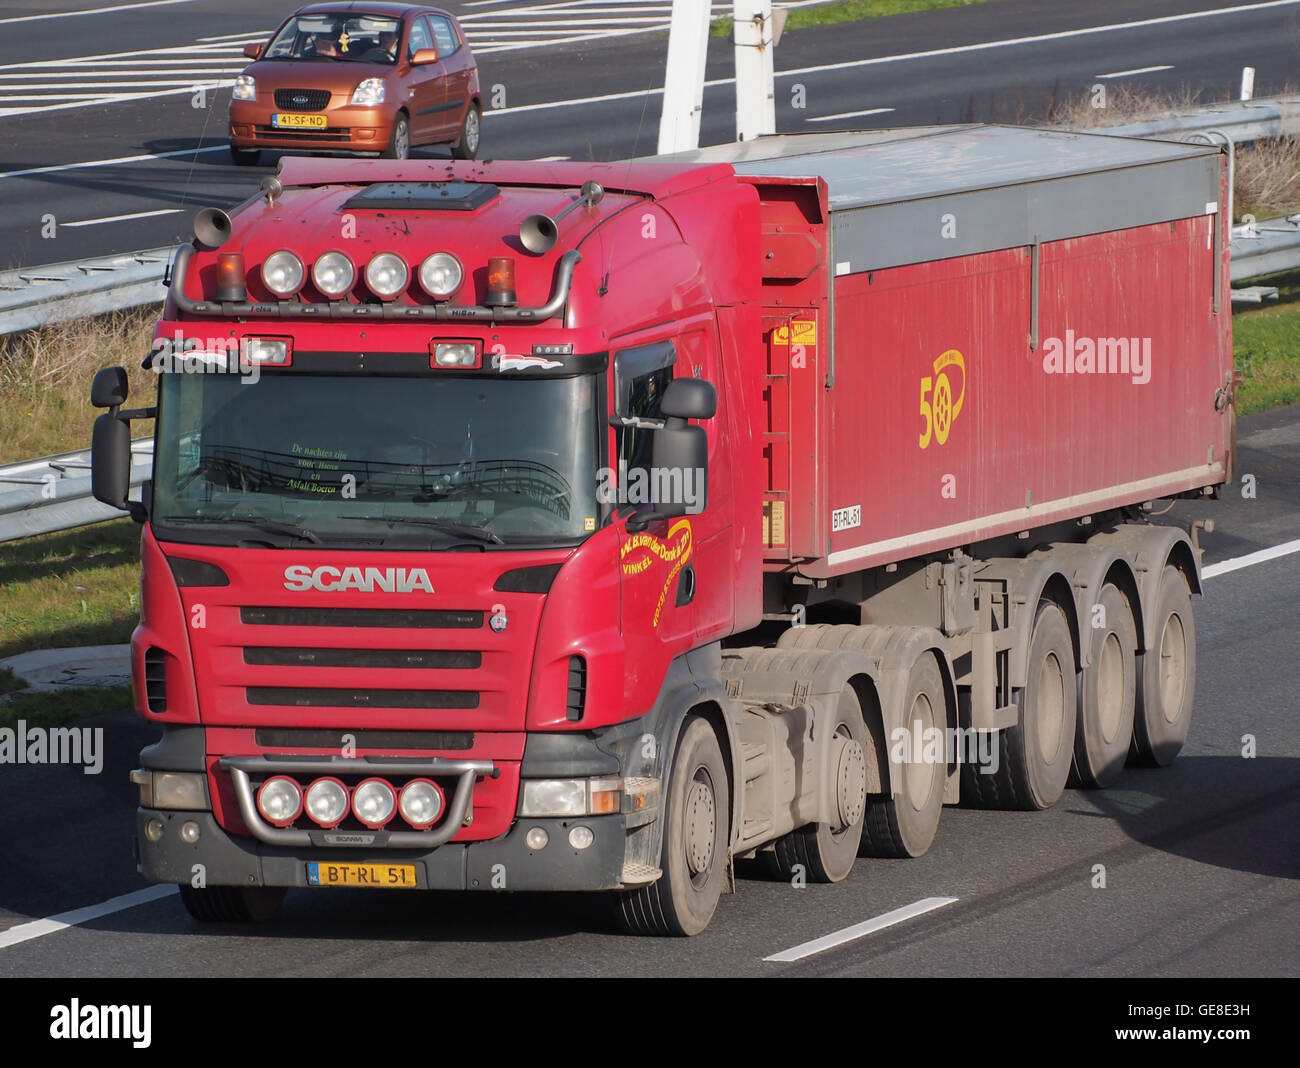 Scania, W B van der Donk & Zn Foto Stock